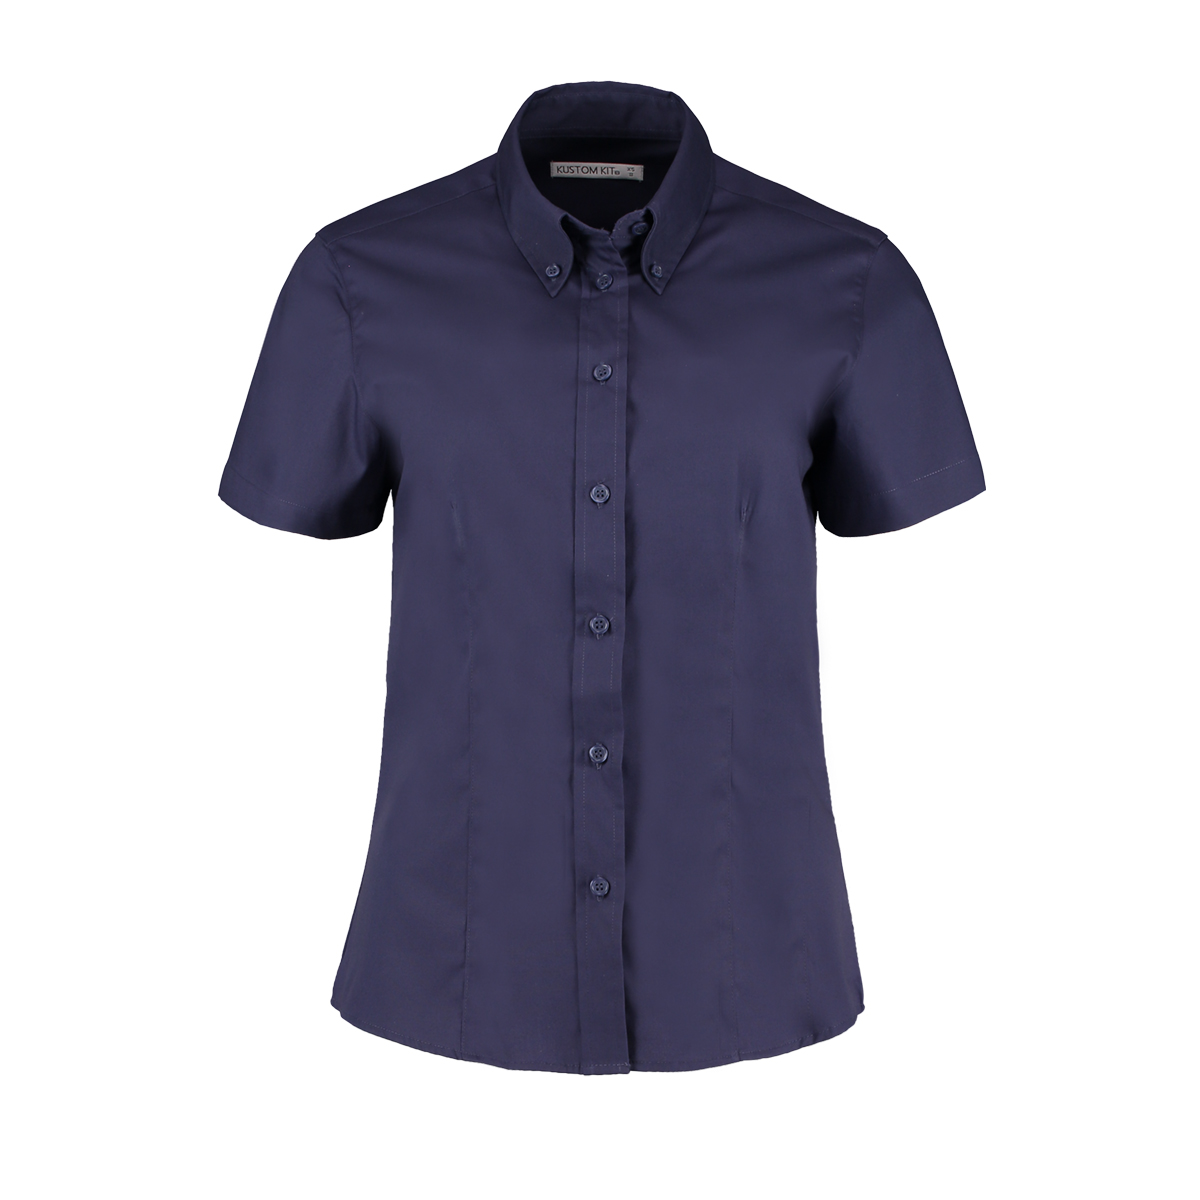 KK701 Premium Oxford Shirt - Kustom Kit